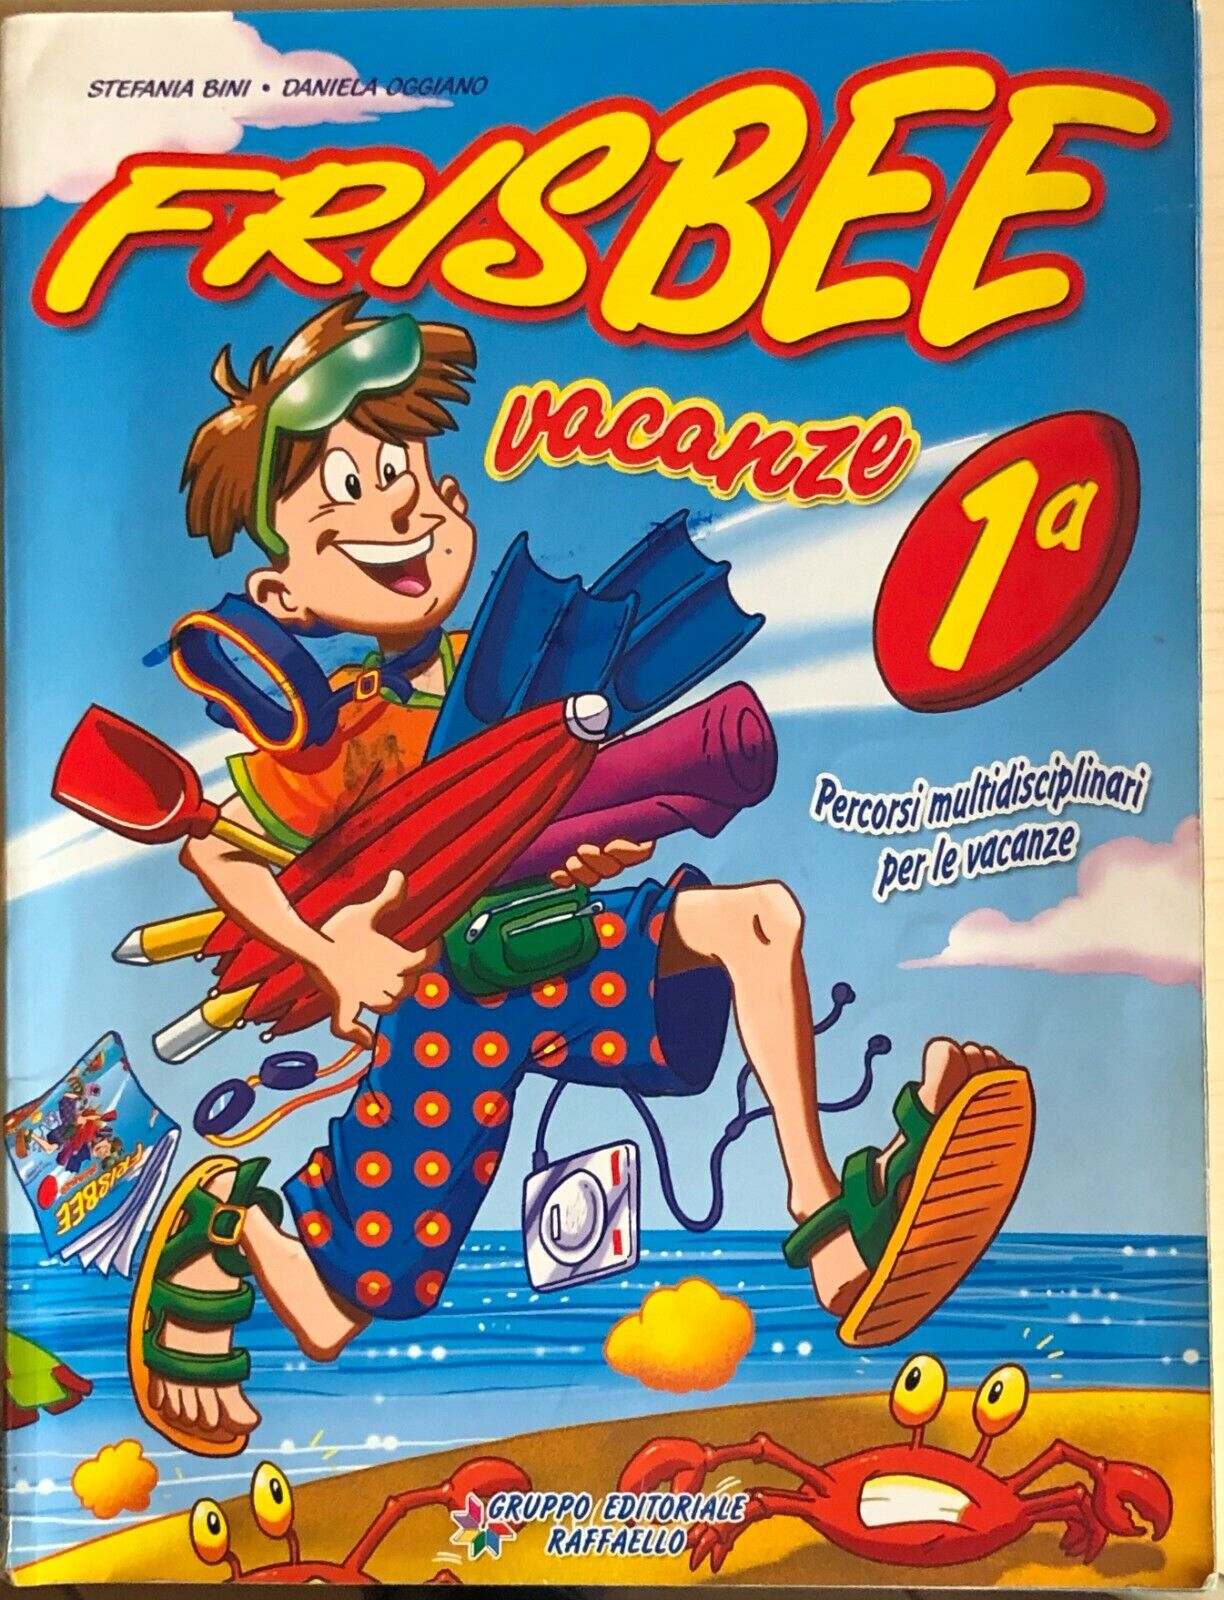 Frisbee vacanze 1a di AA.VV., 2004, Gruppo Editoriale Raffaello